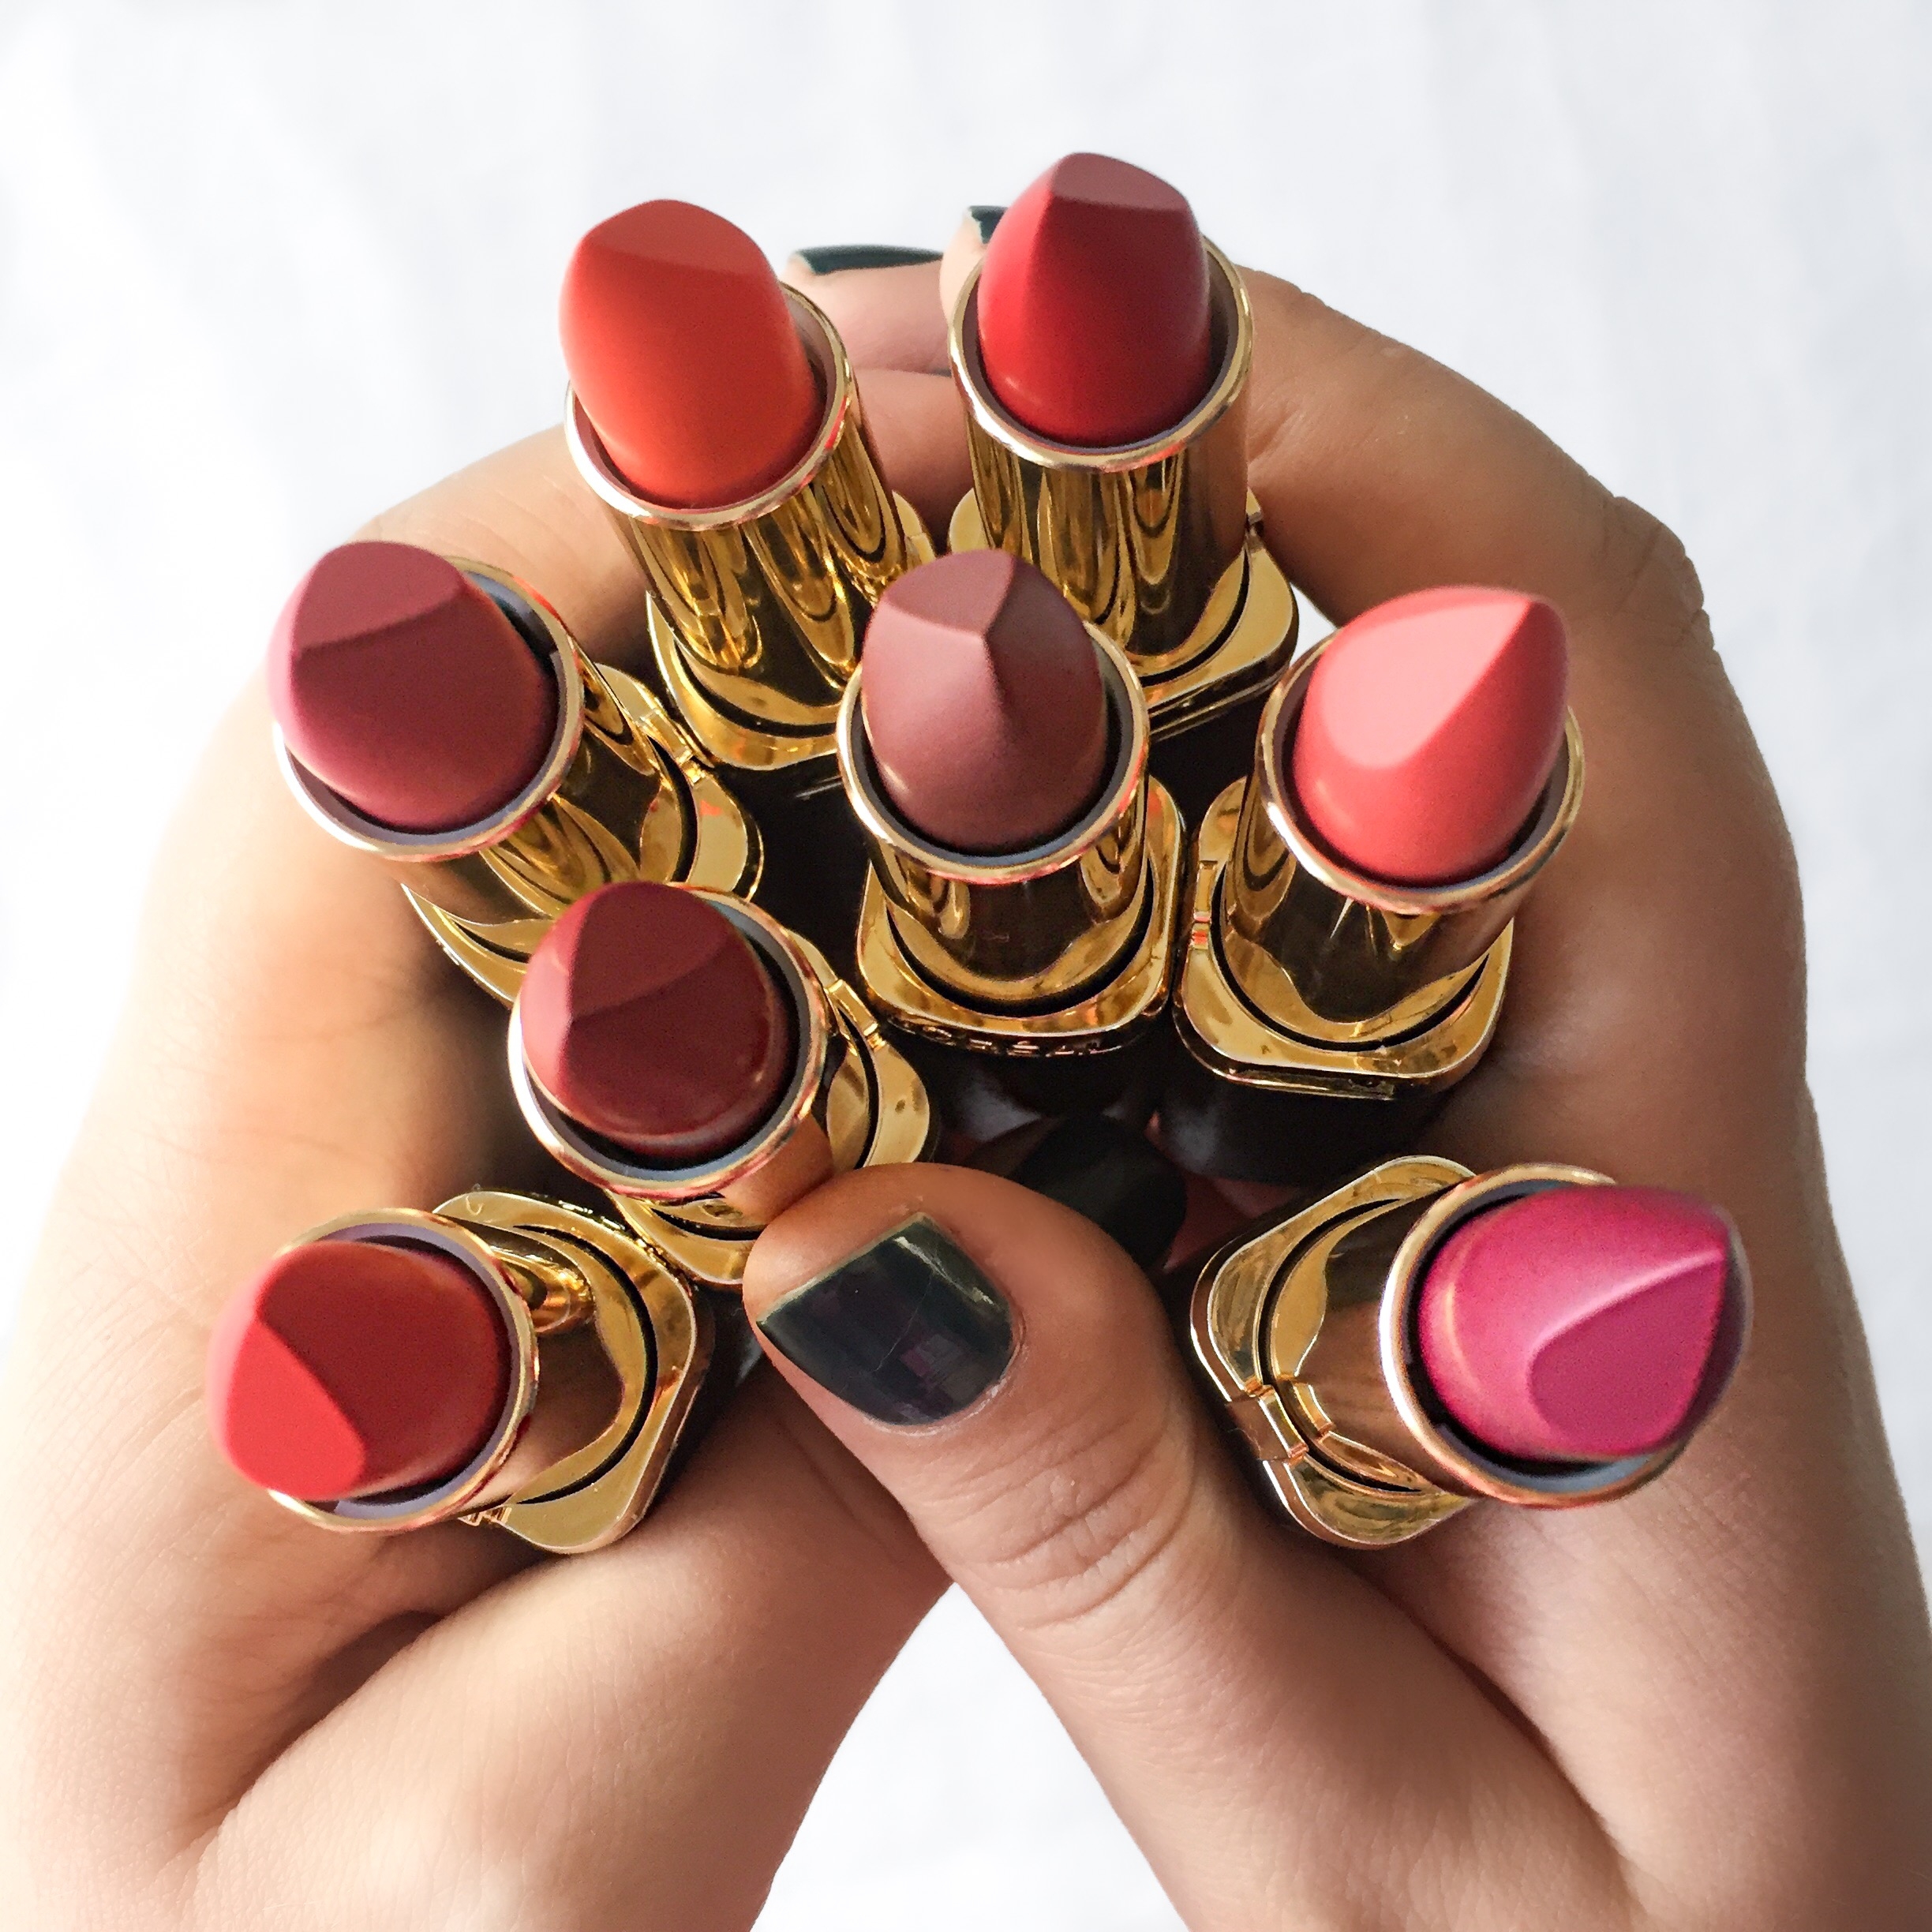 L’Oreal Colour Riche Matte Lipsticks: Review + Swatches